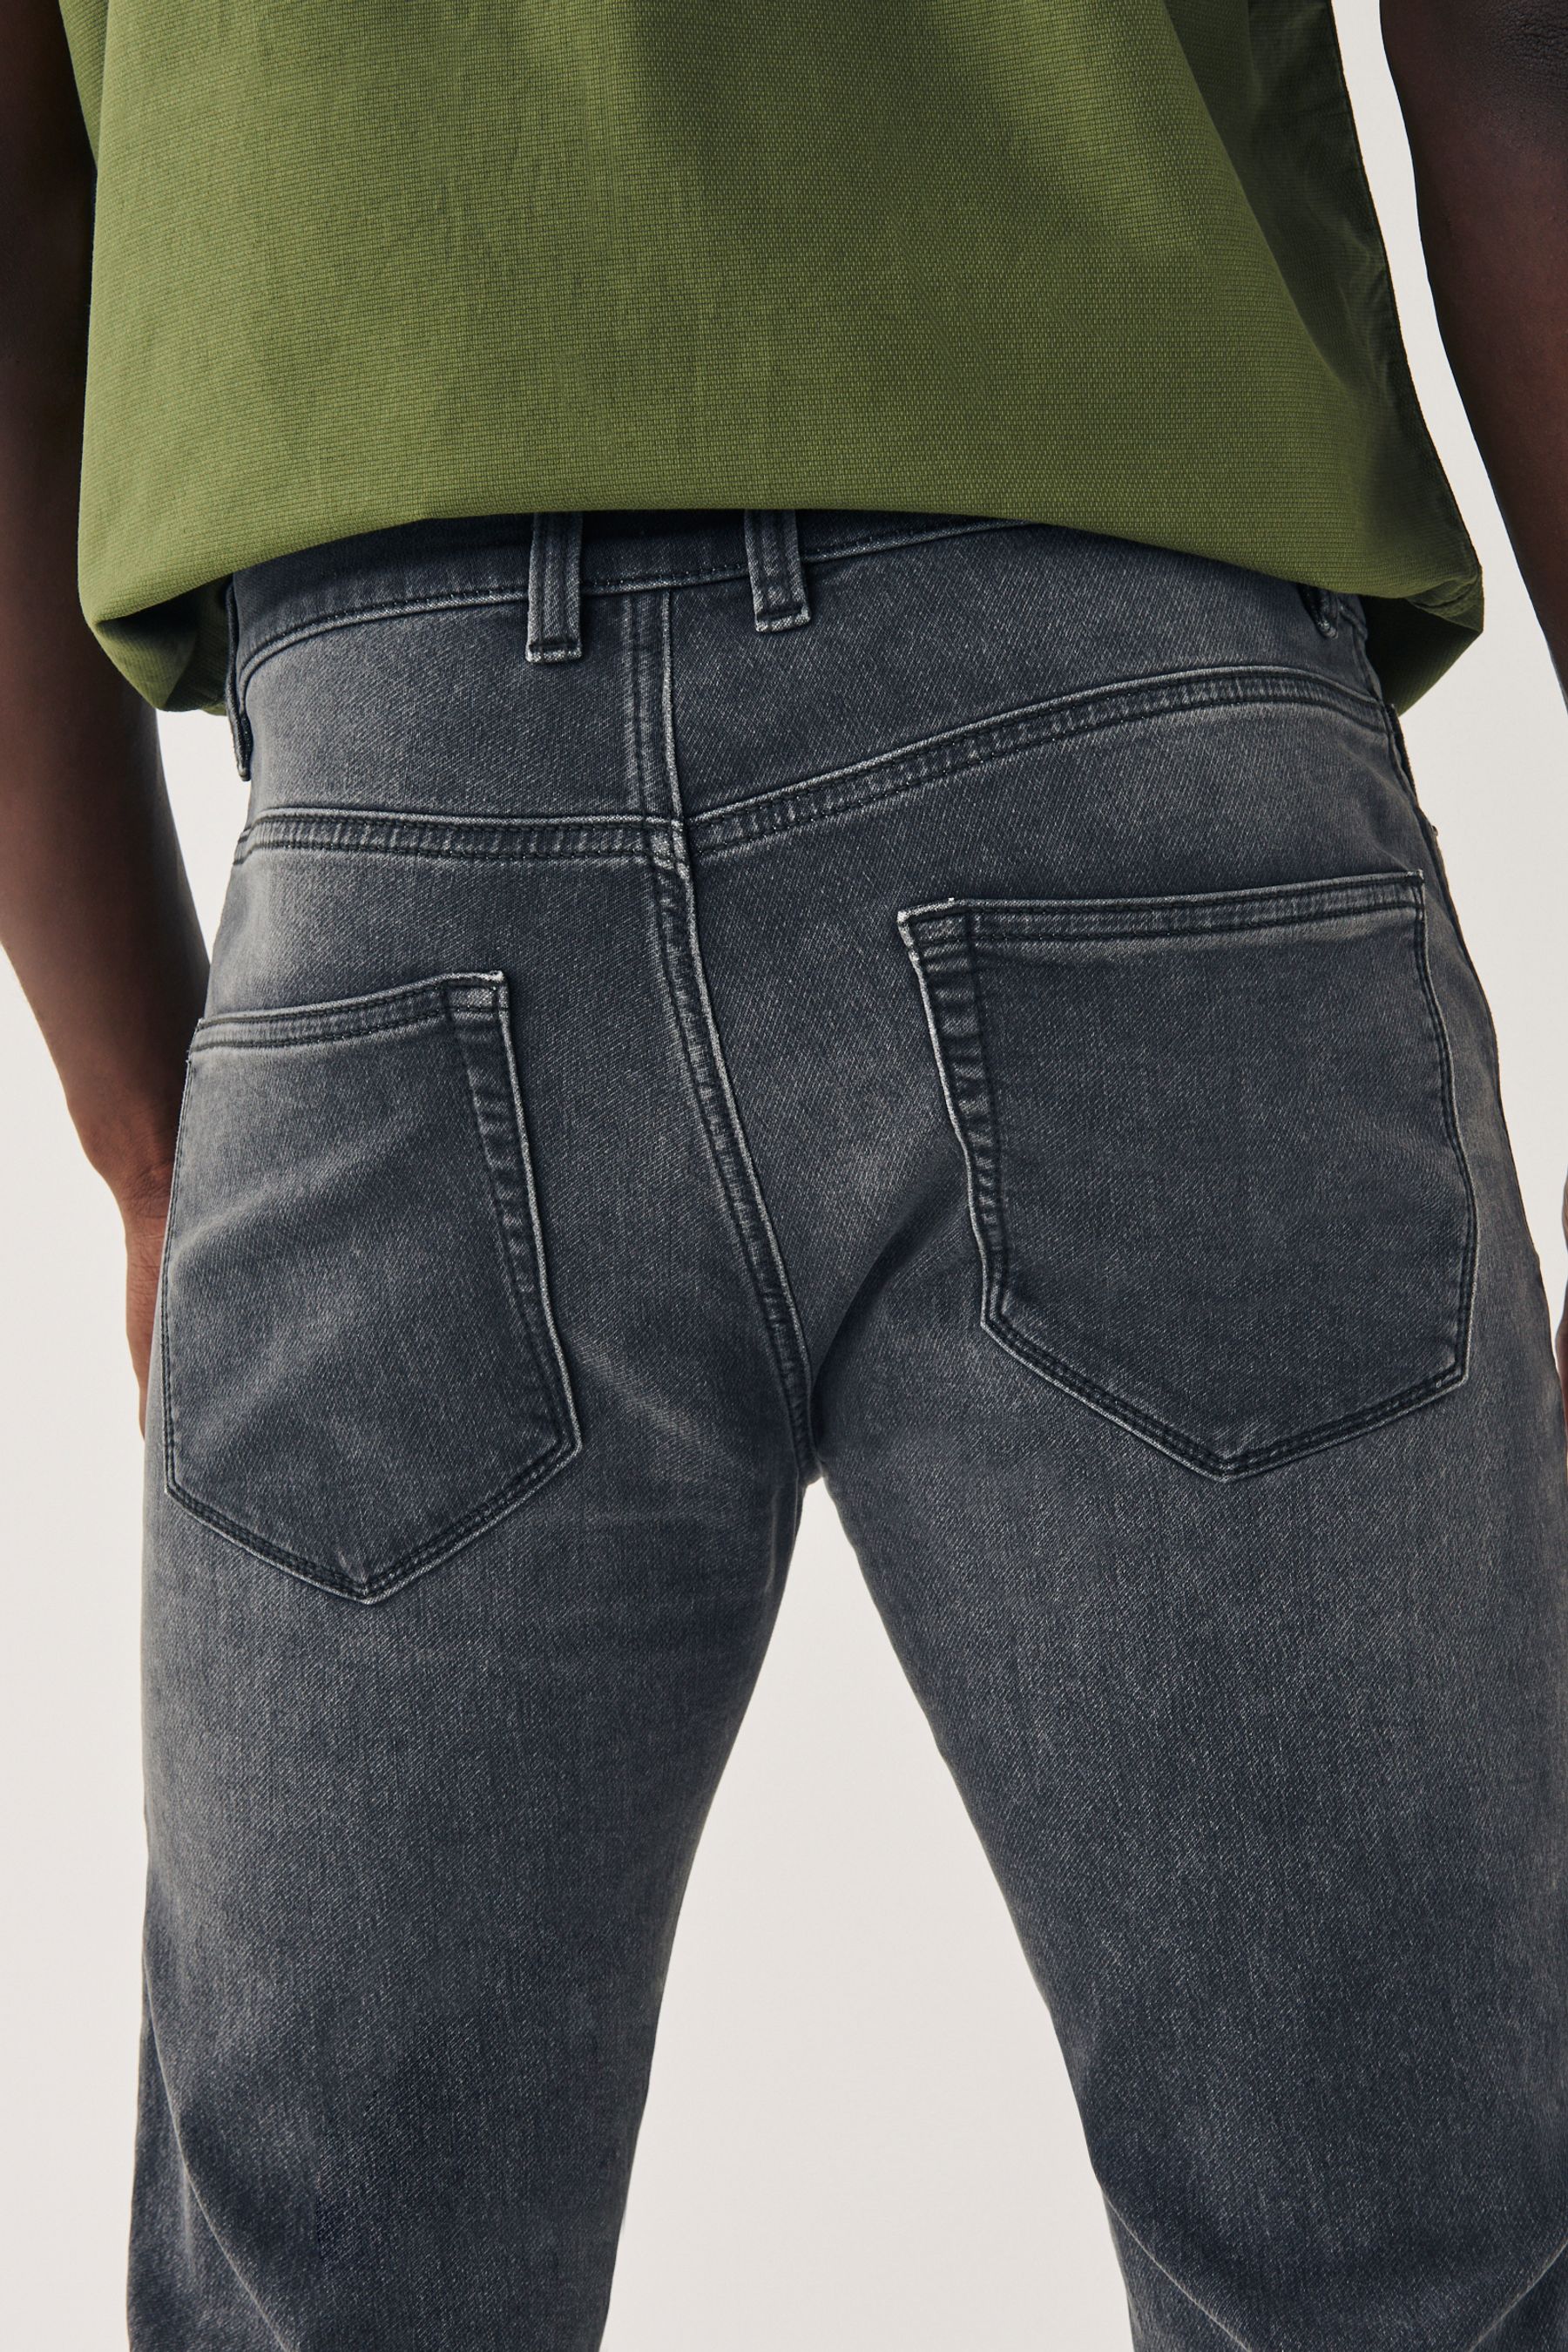 Ultimate Comfort Super Stretch Jeans Skinny Fit